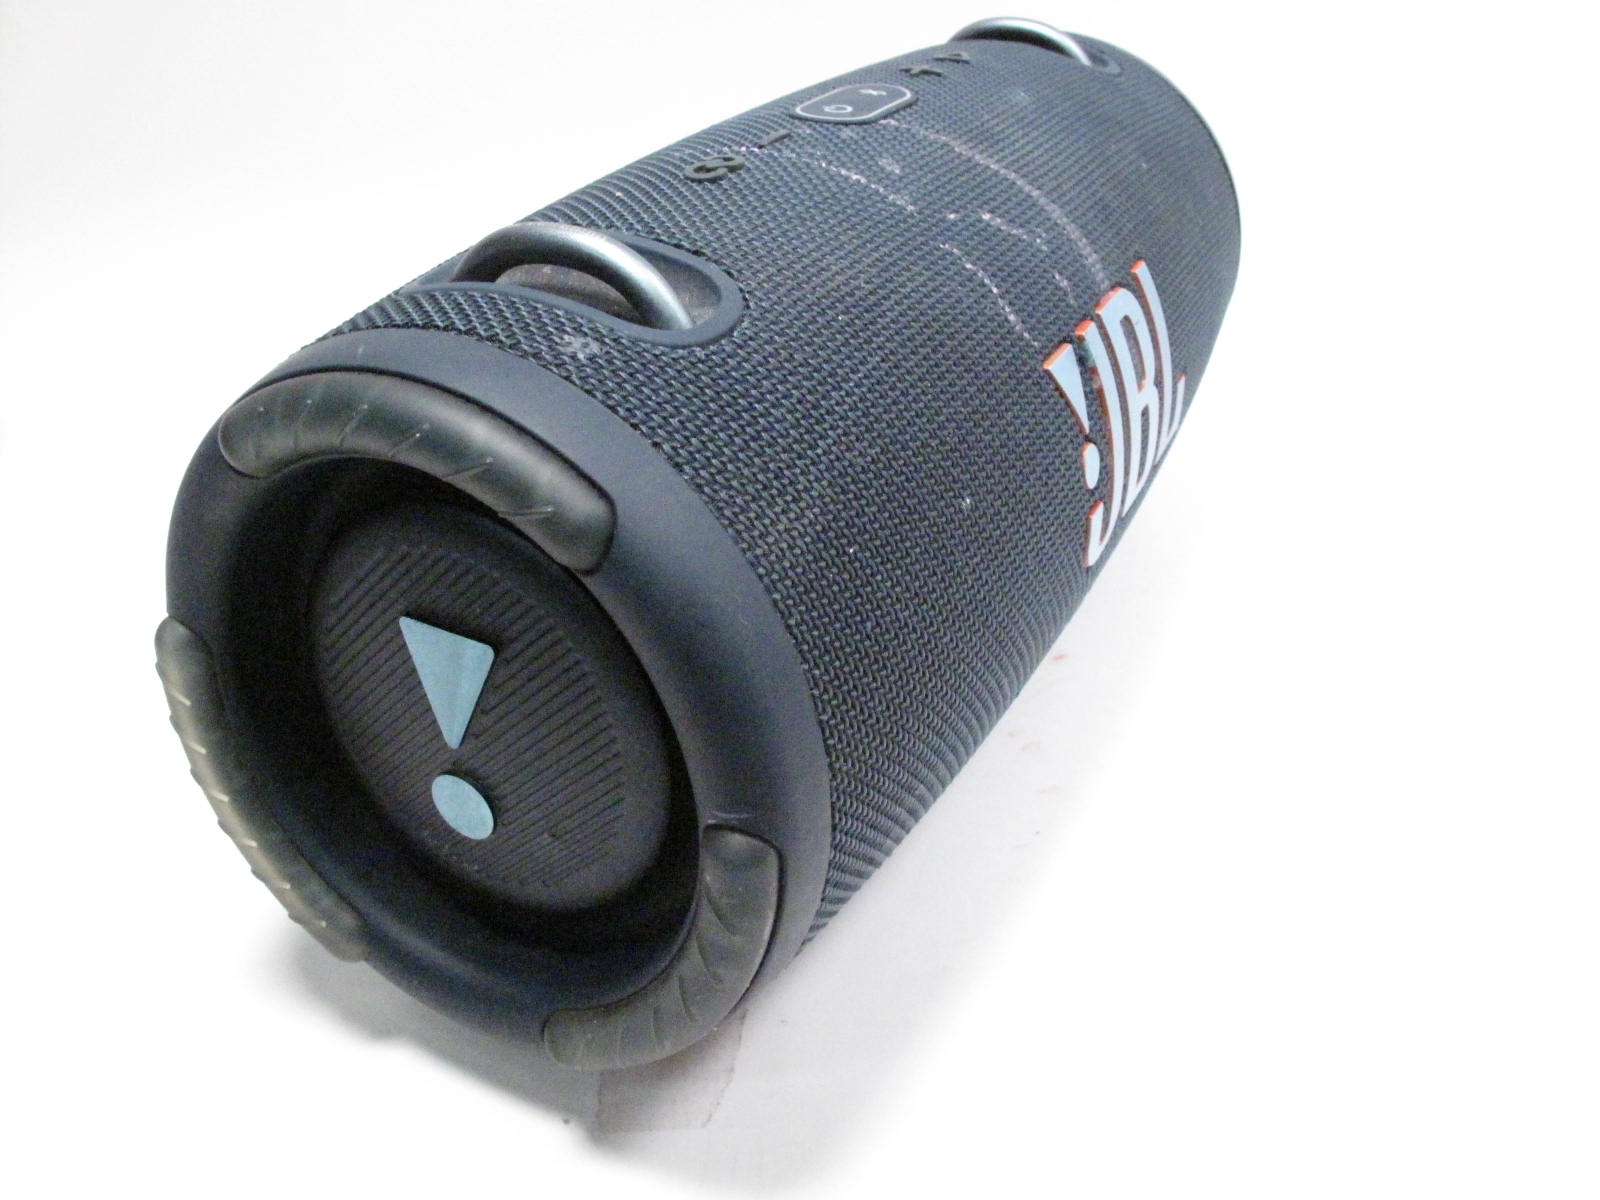 JBL Xtreme Portable Wireless Bluetooth Speaker (Blue)